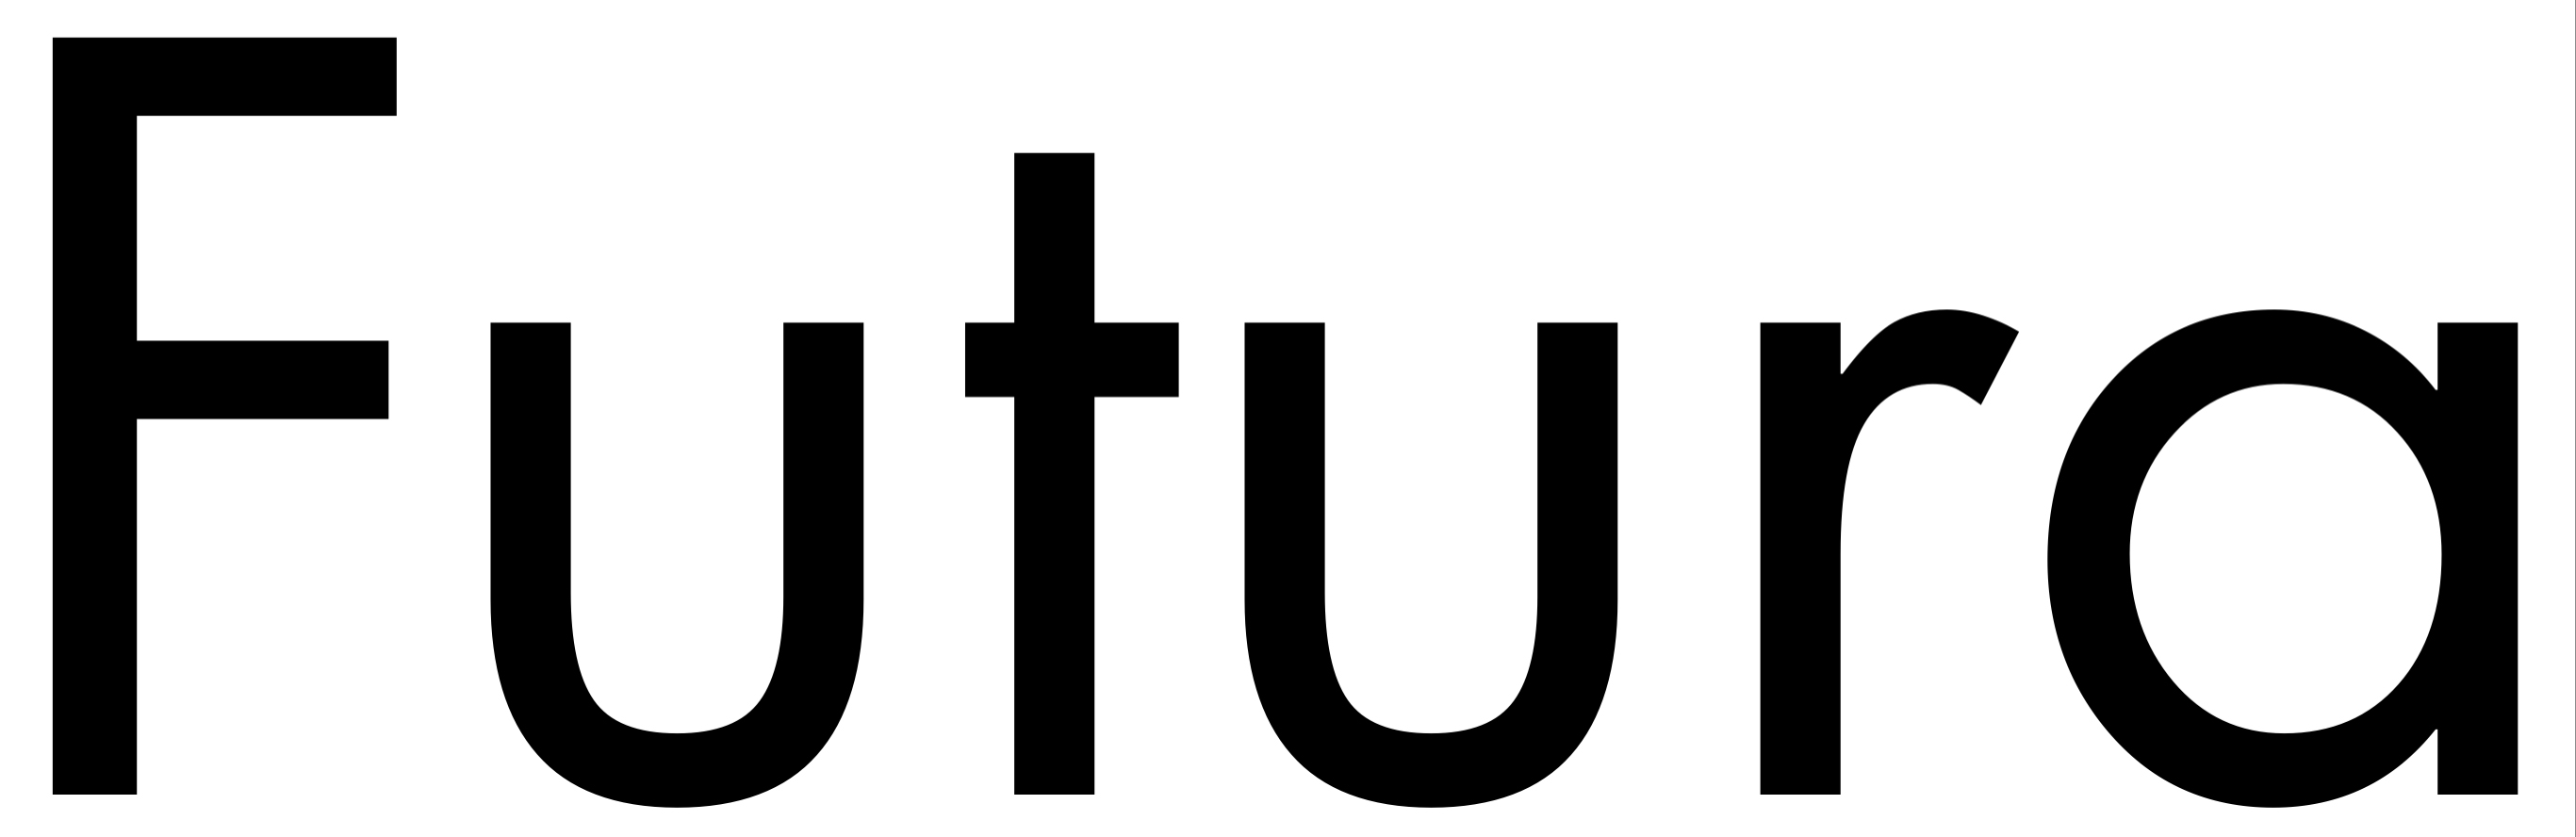 Futura typeface